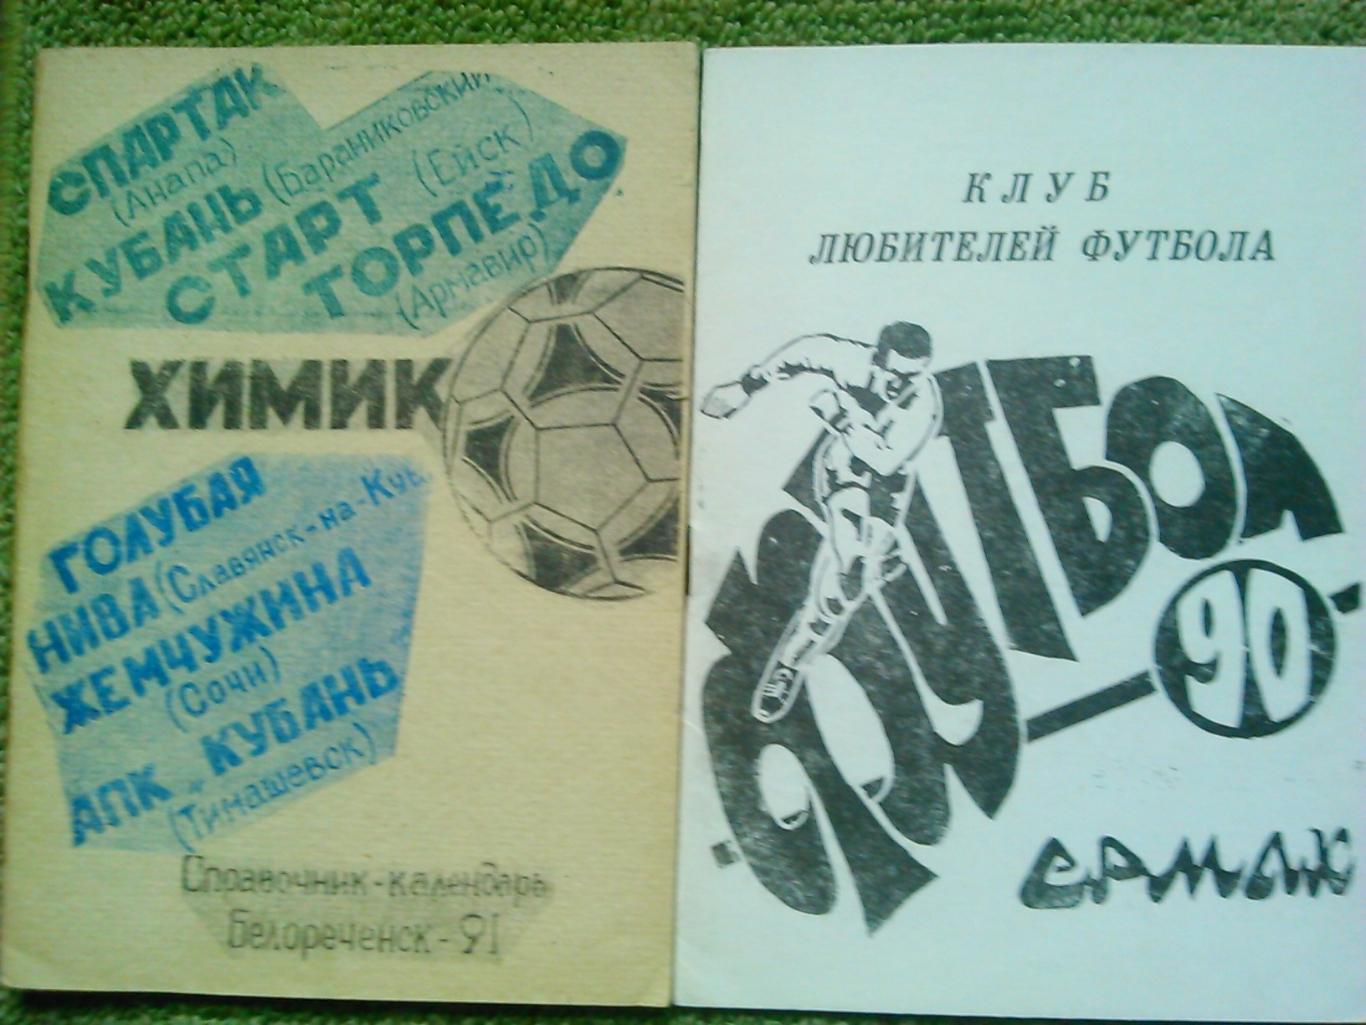 ФУТБОЛ-1991. Клуб любителей футбола. Белореченск. Оптом скидки до 45%!